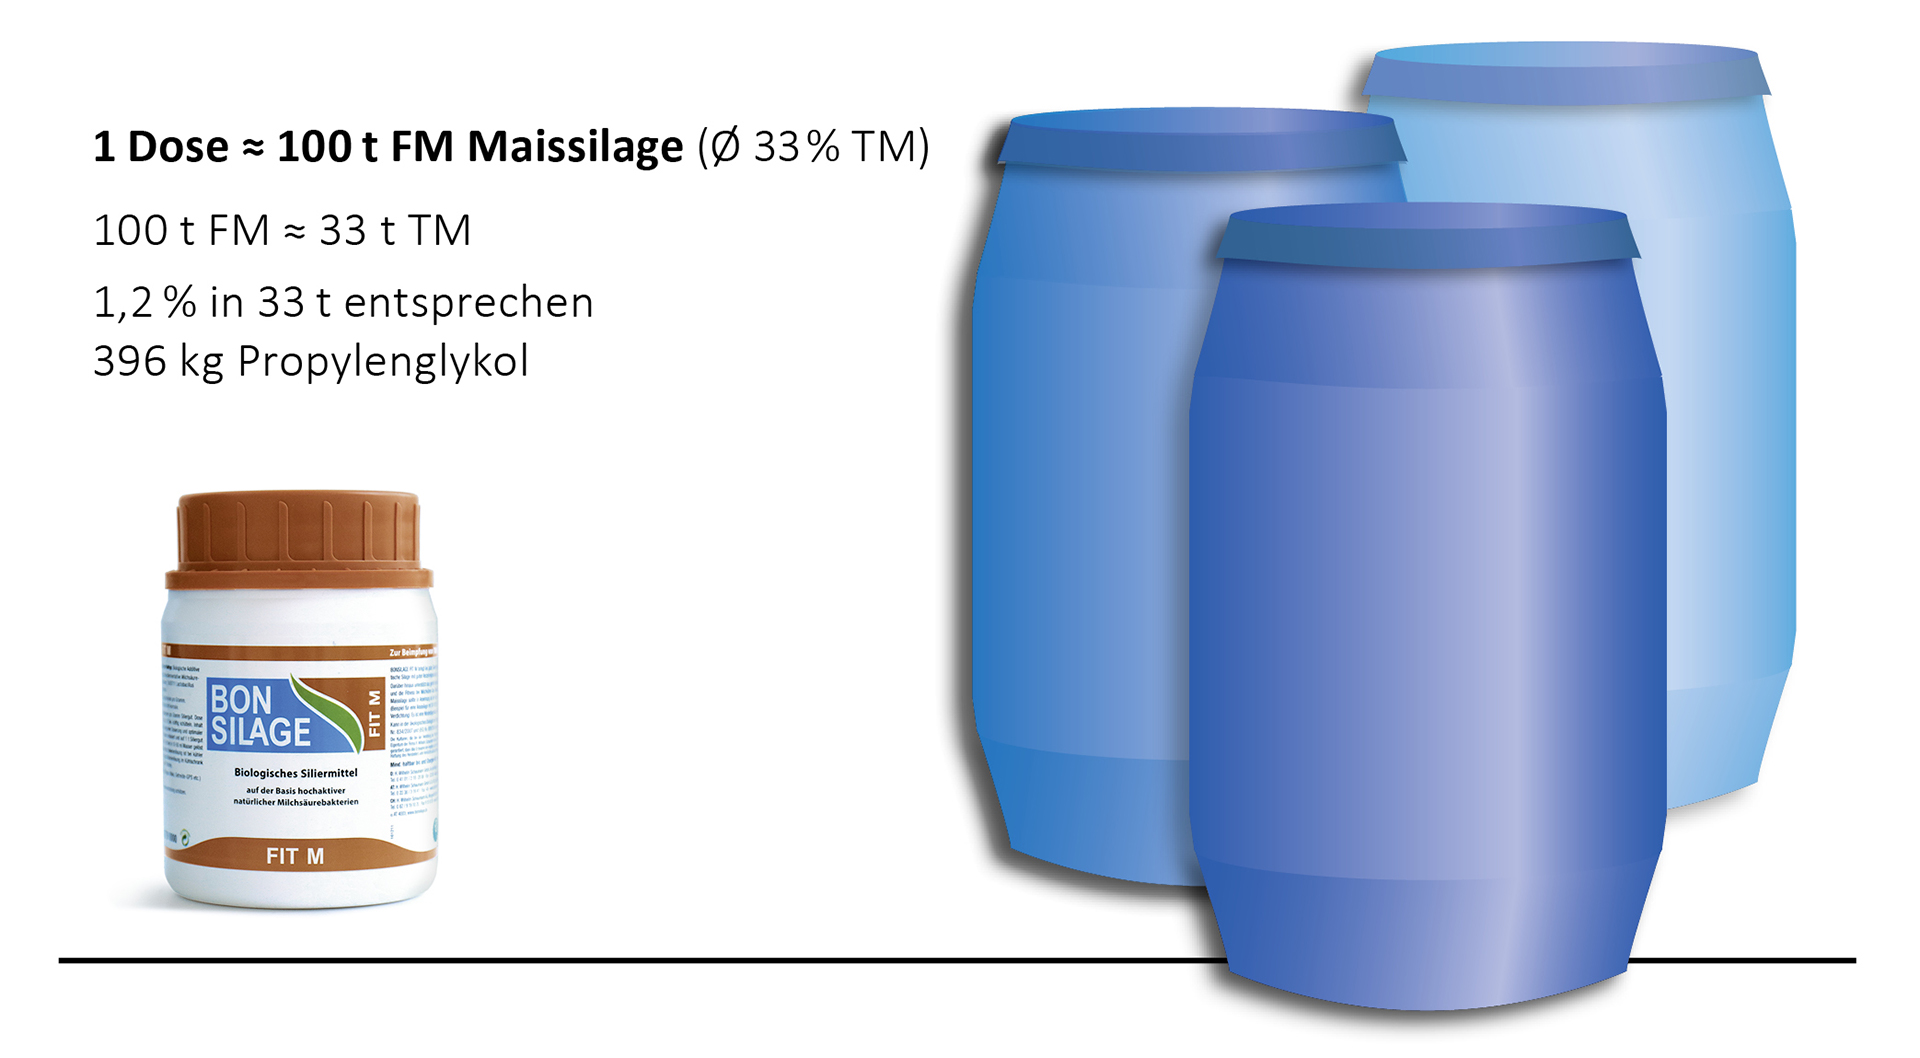 Eine Dose BONSILAGE FIT M produziert 396 kg Propylenglykol